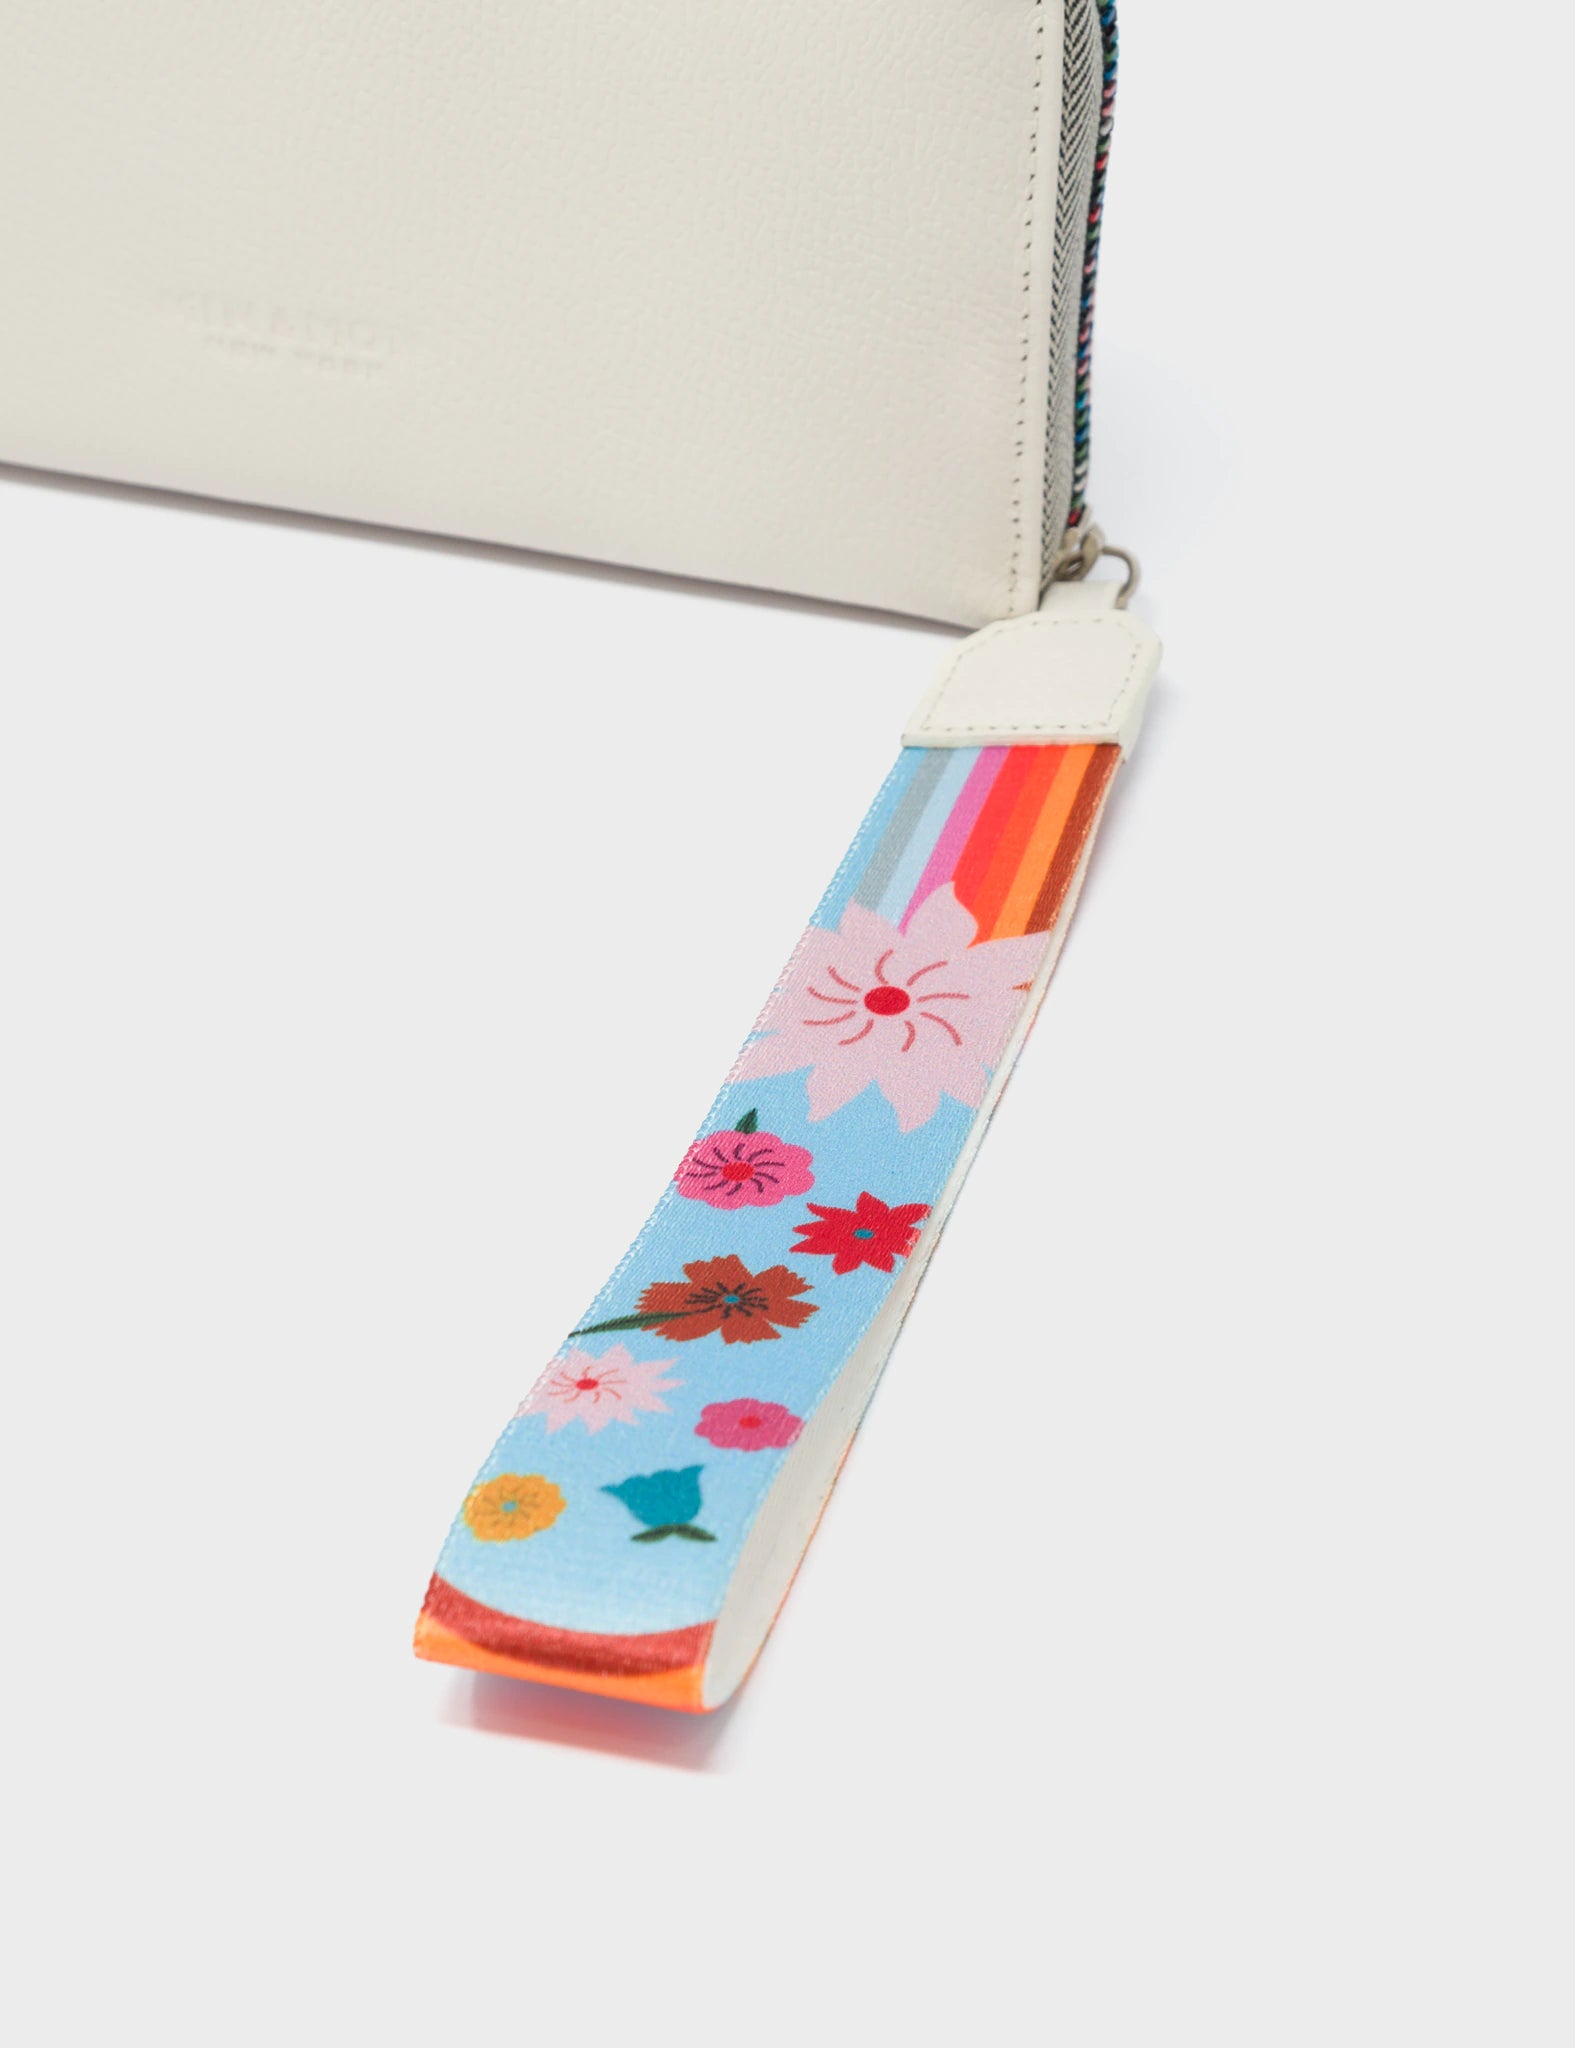 Francis Cream Leather Wallet - Groovy Rainbow Design - handle 